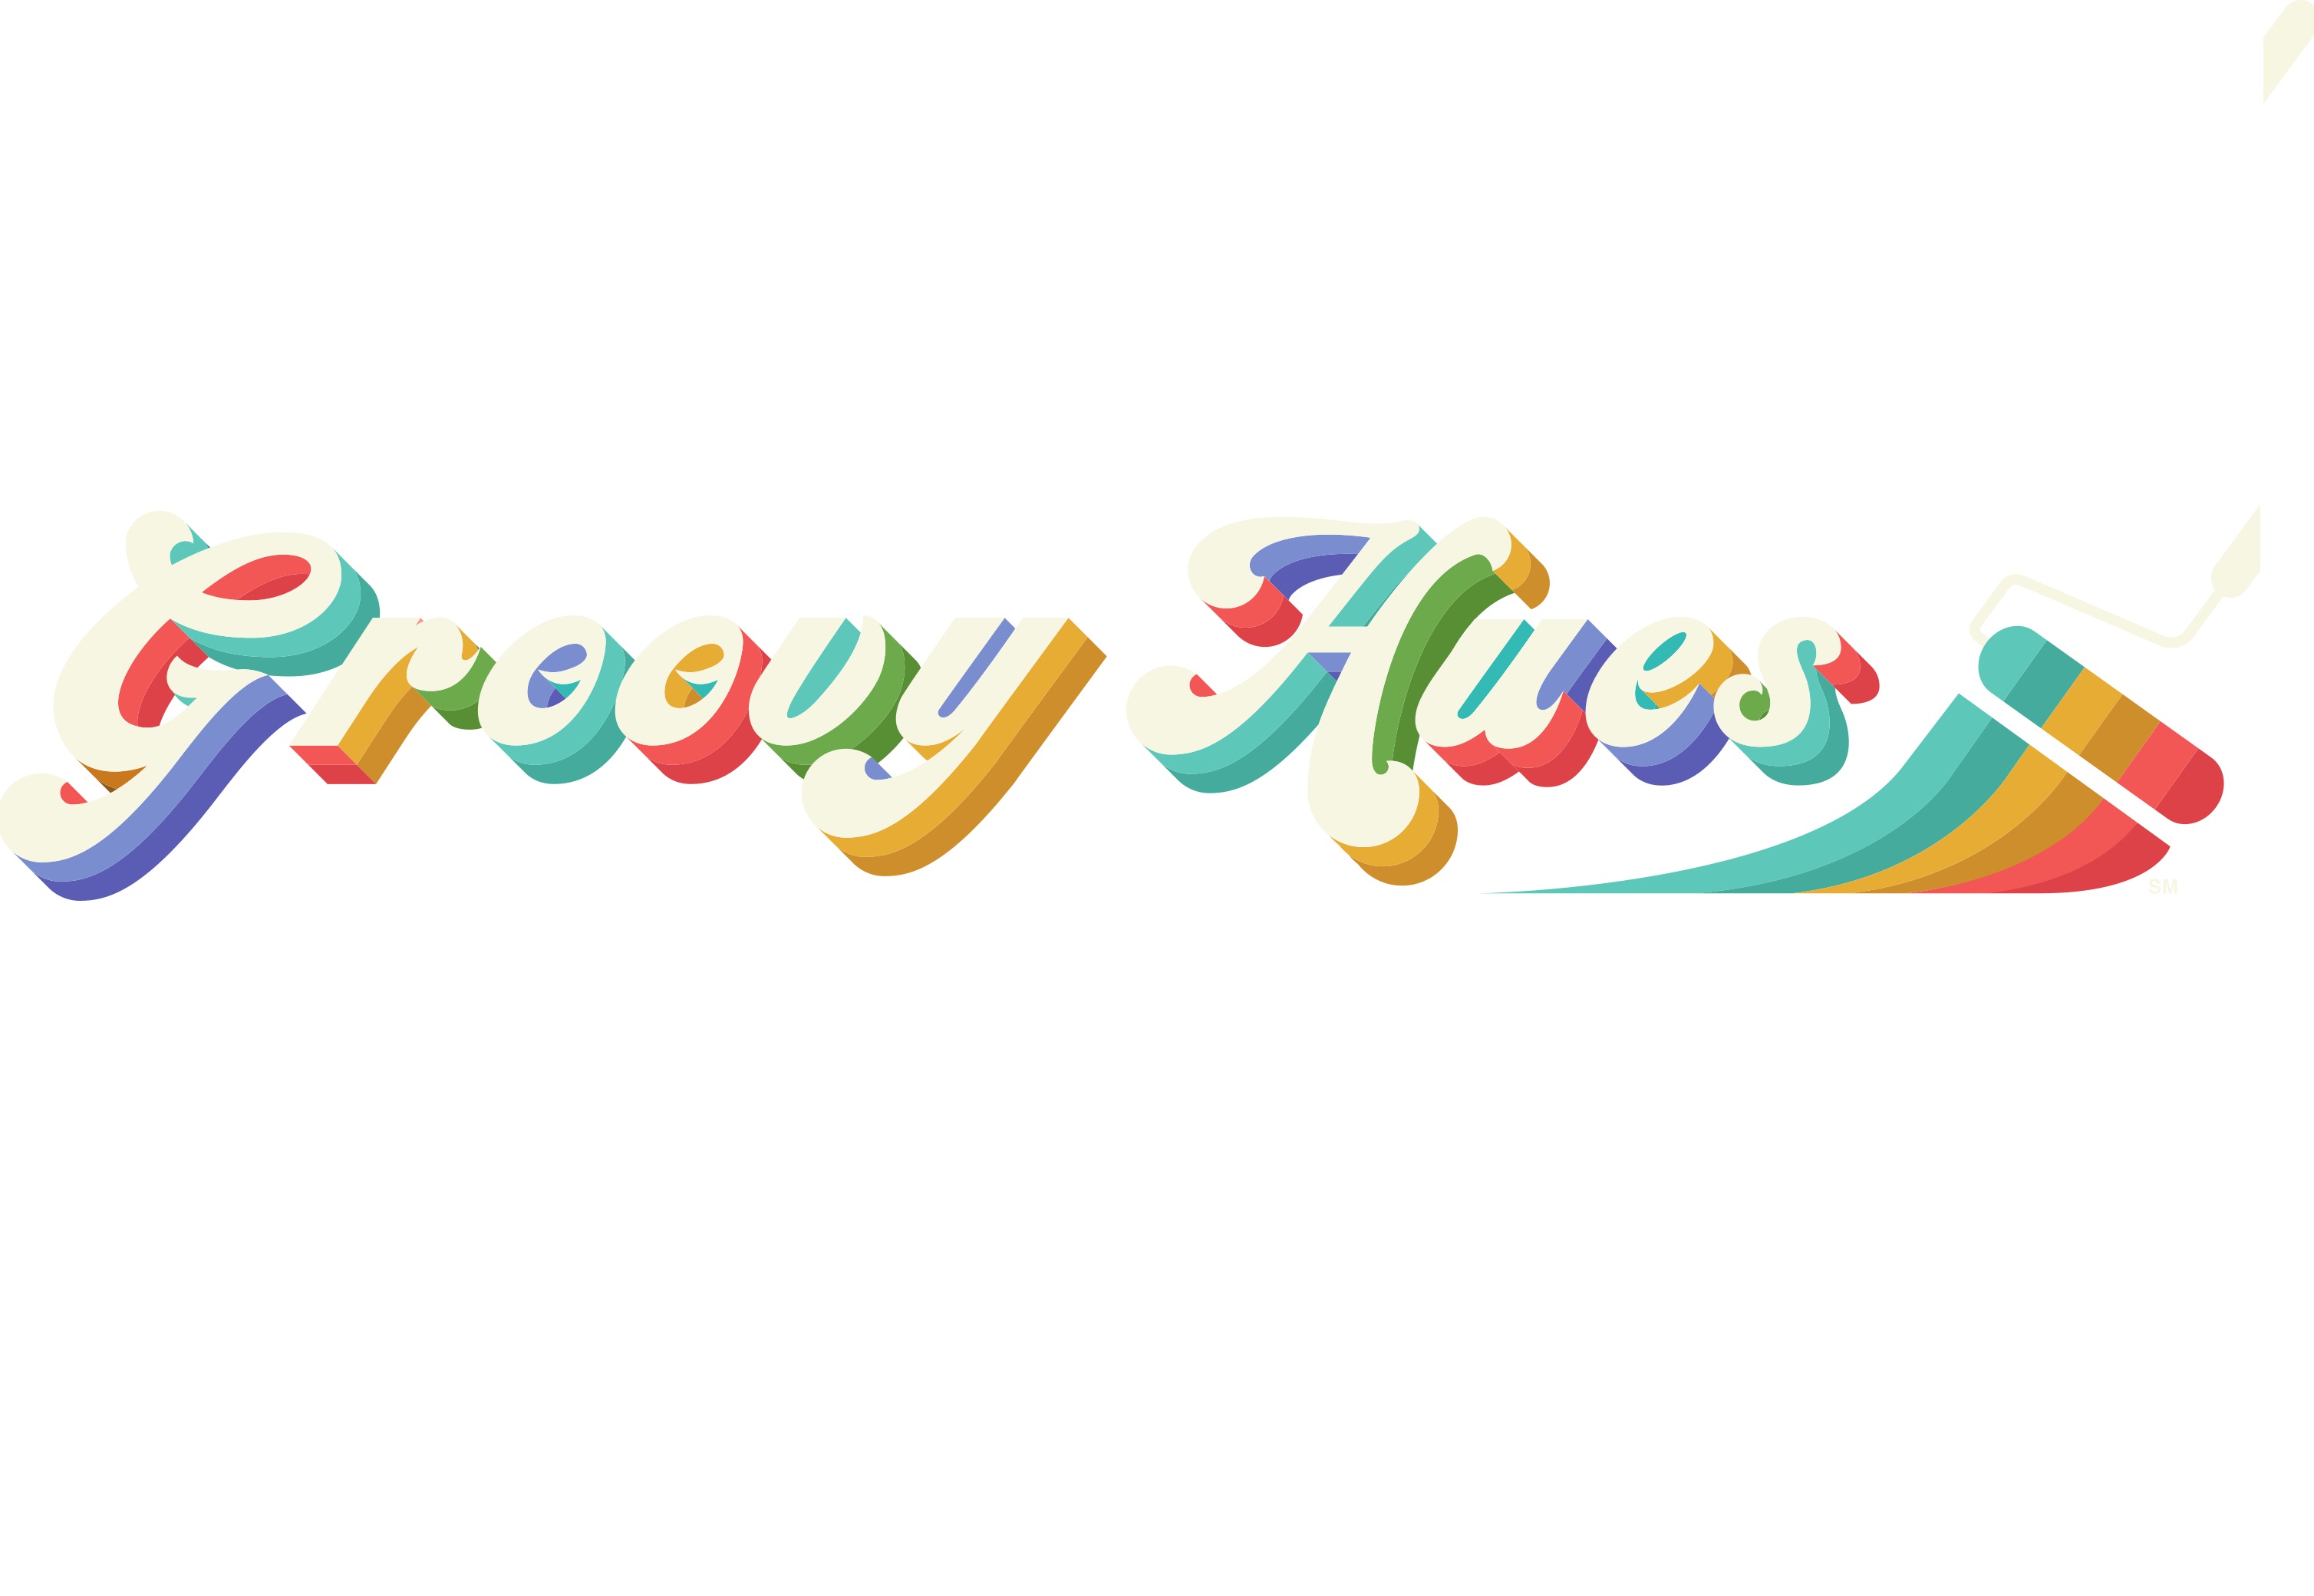 Groovy-logo2.jpg